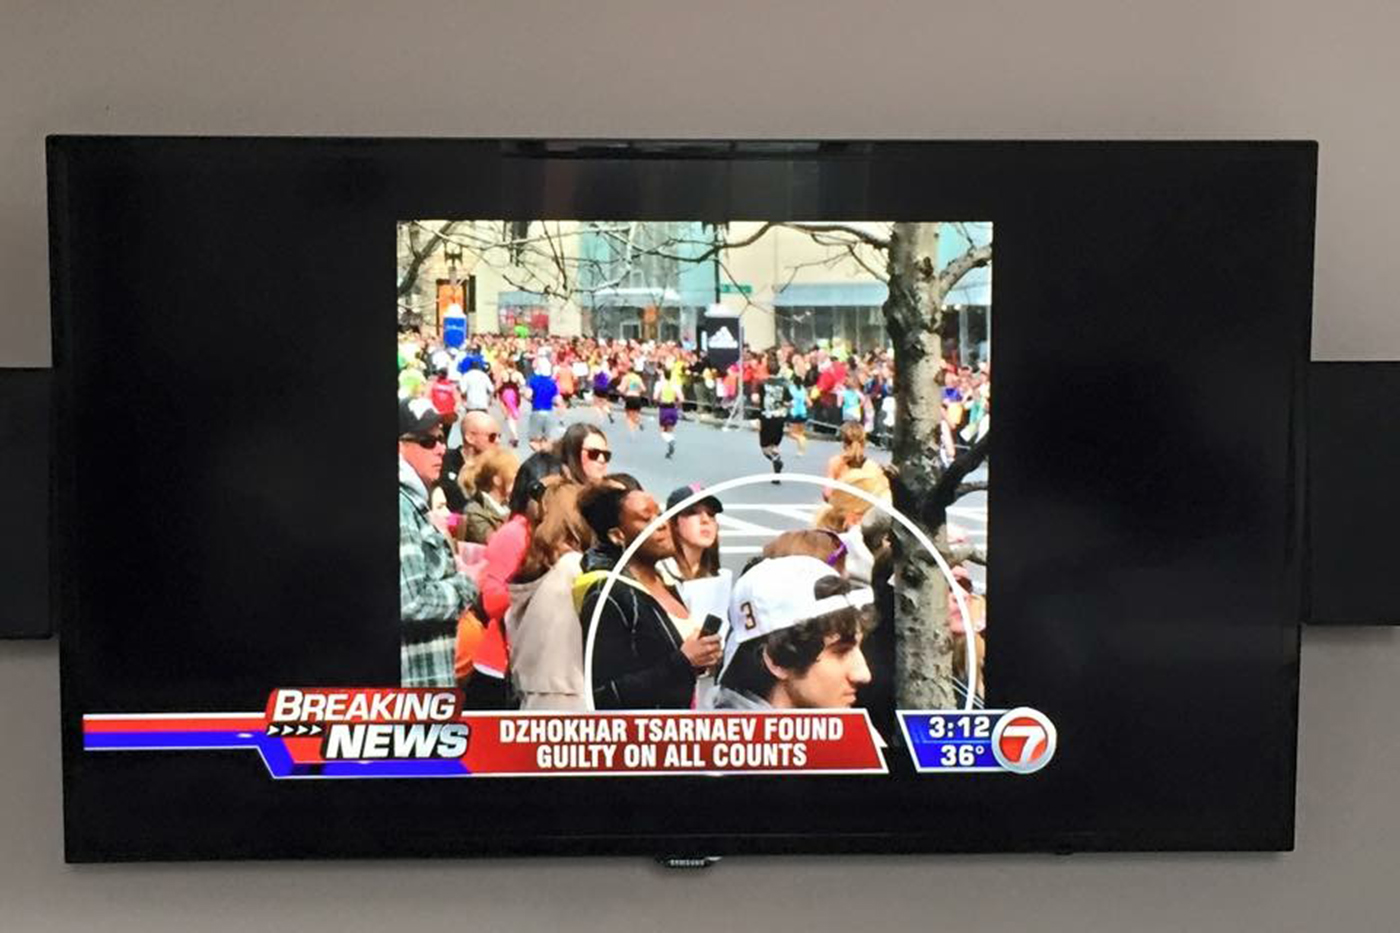 tv displaying news station image of Dzhokhar Tsarnaev standing nearby Audrey Evans